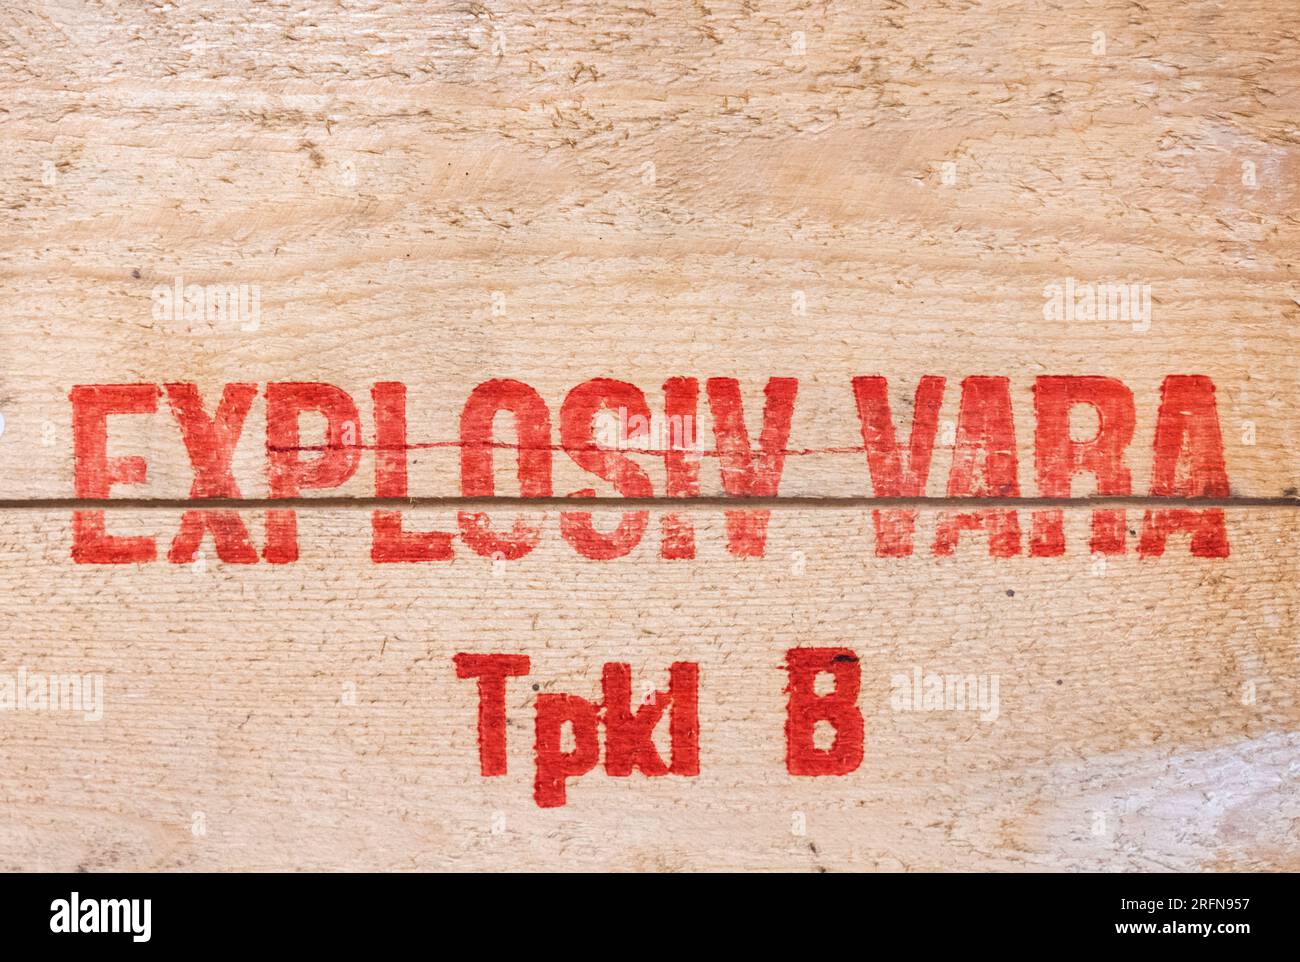 Signs and symbols, a flea market, explosive item (In swedish: Explosiv vara, Tpkl B). Stock Photo